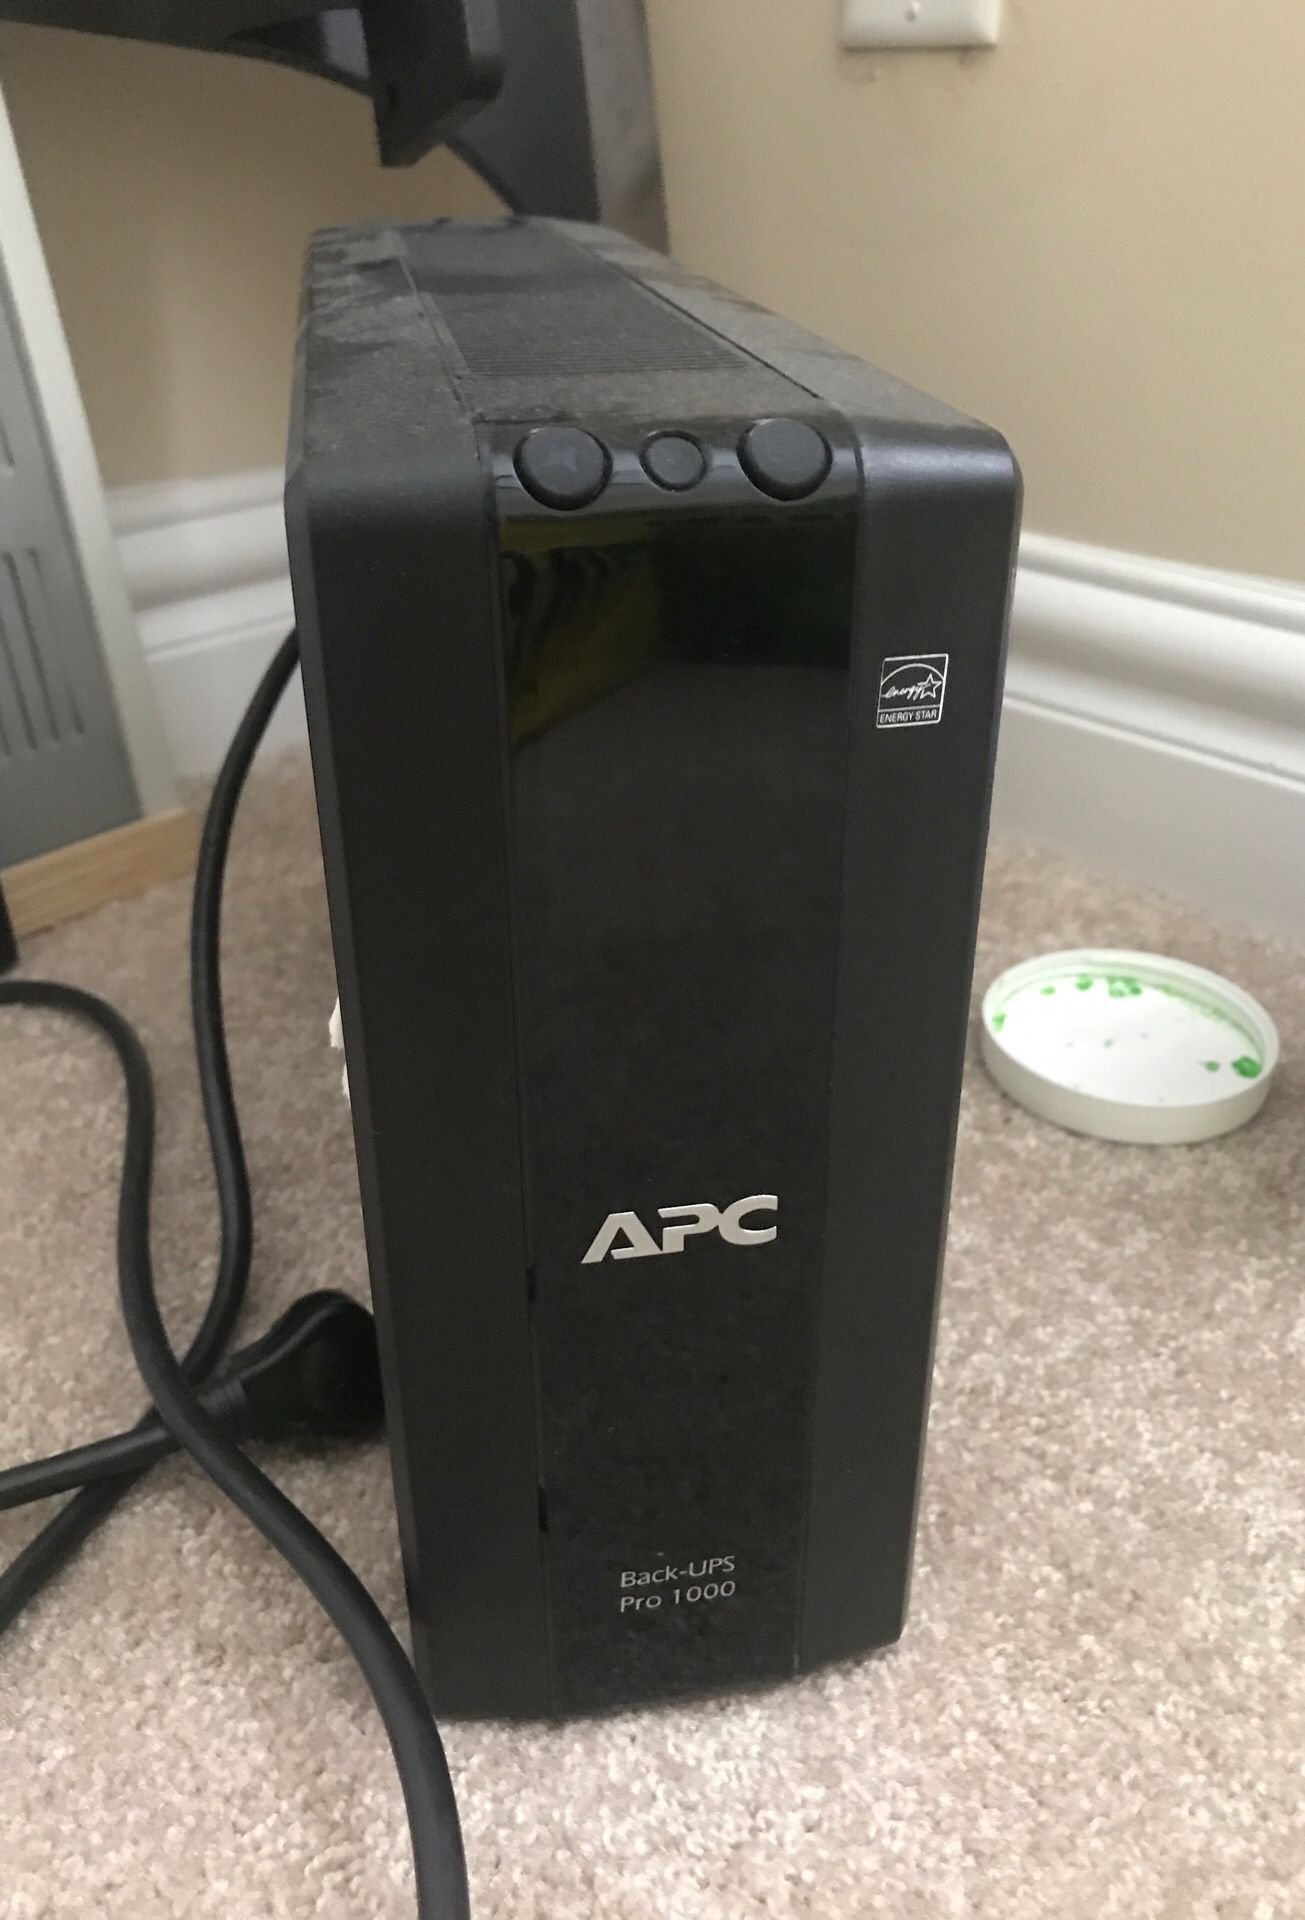 APC power battery